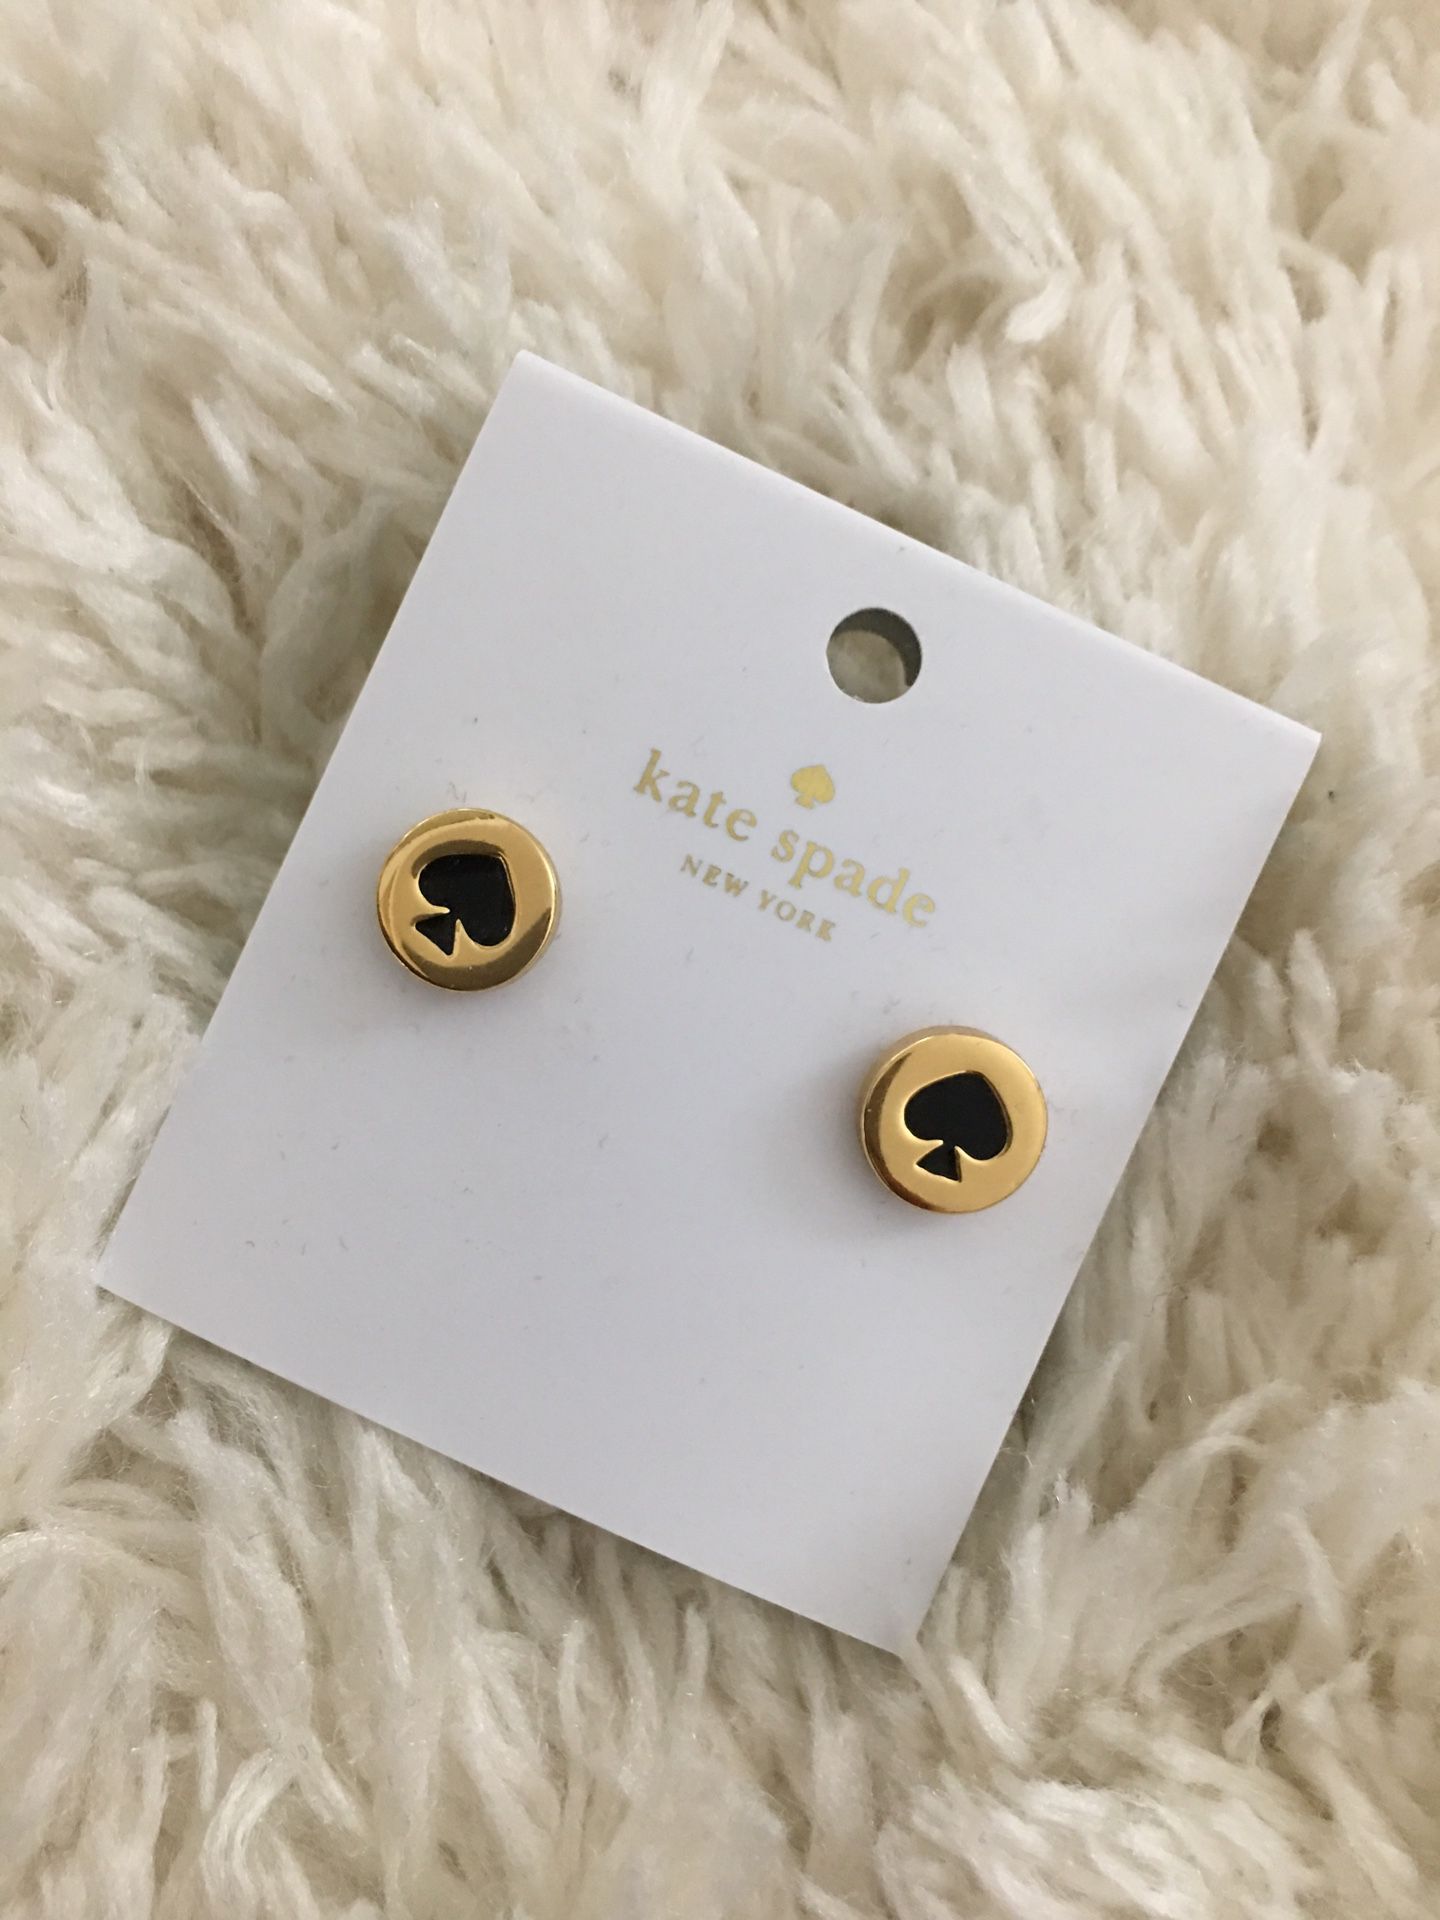 Kate Spade Earrings with bag